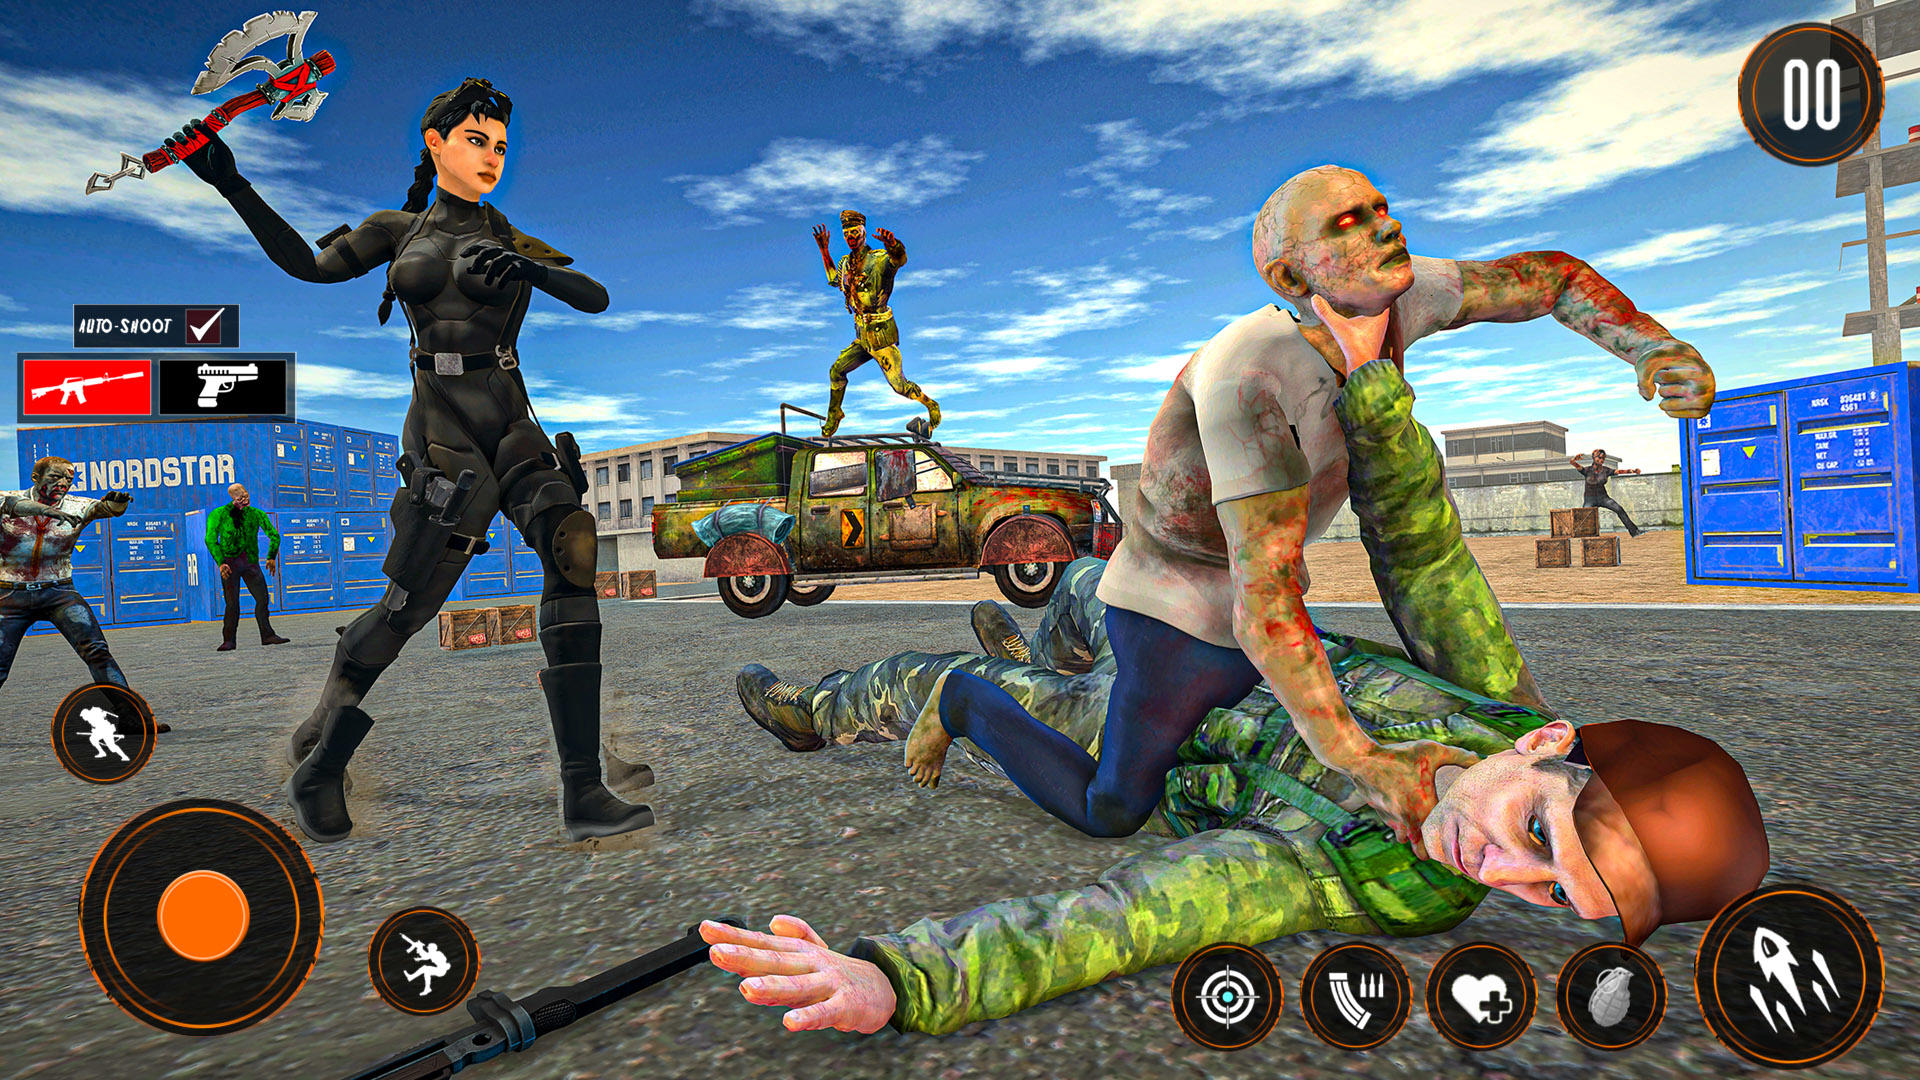 Morto zumbi Atirador: Alvo zumbi jogos 3D::Appstore for Android